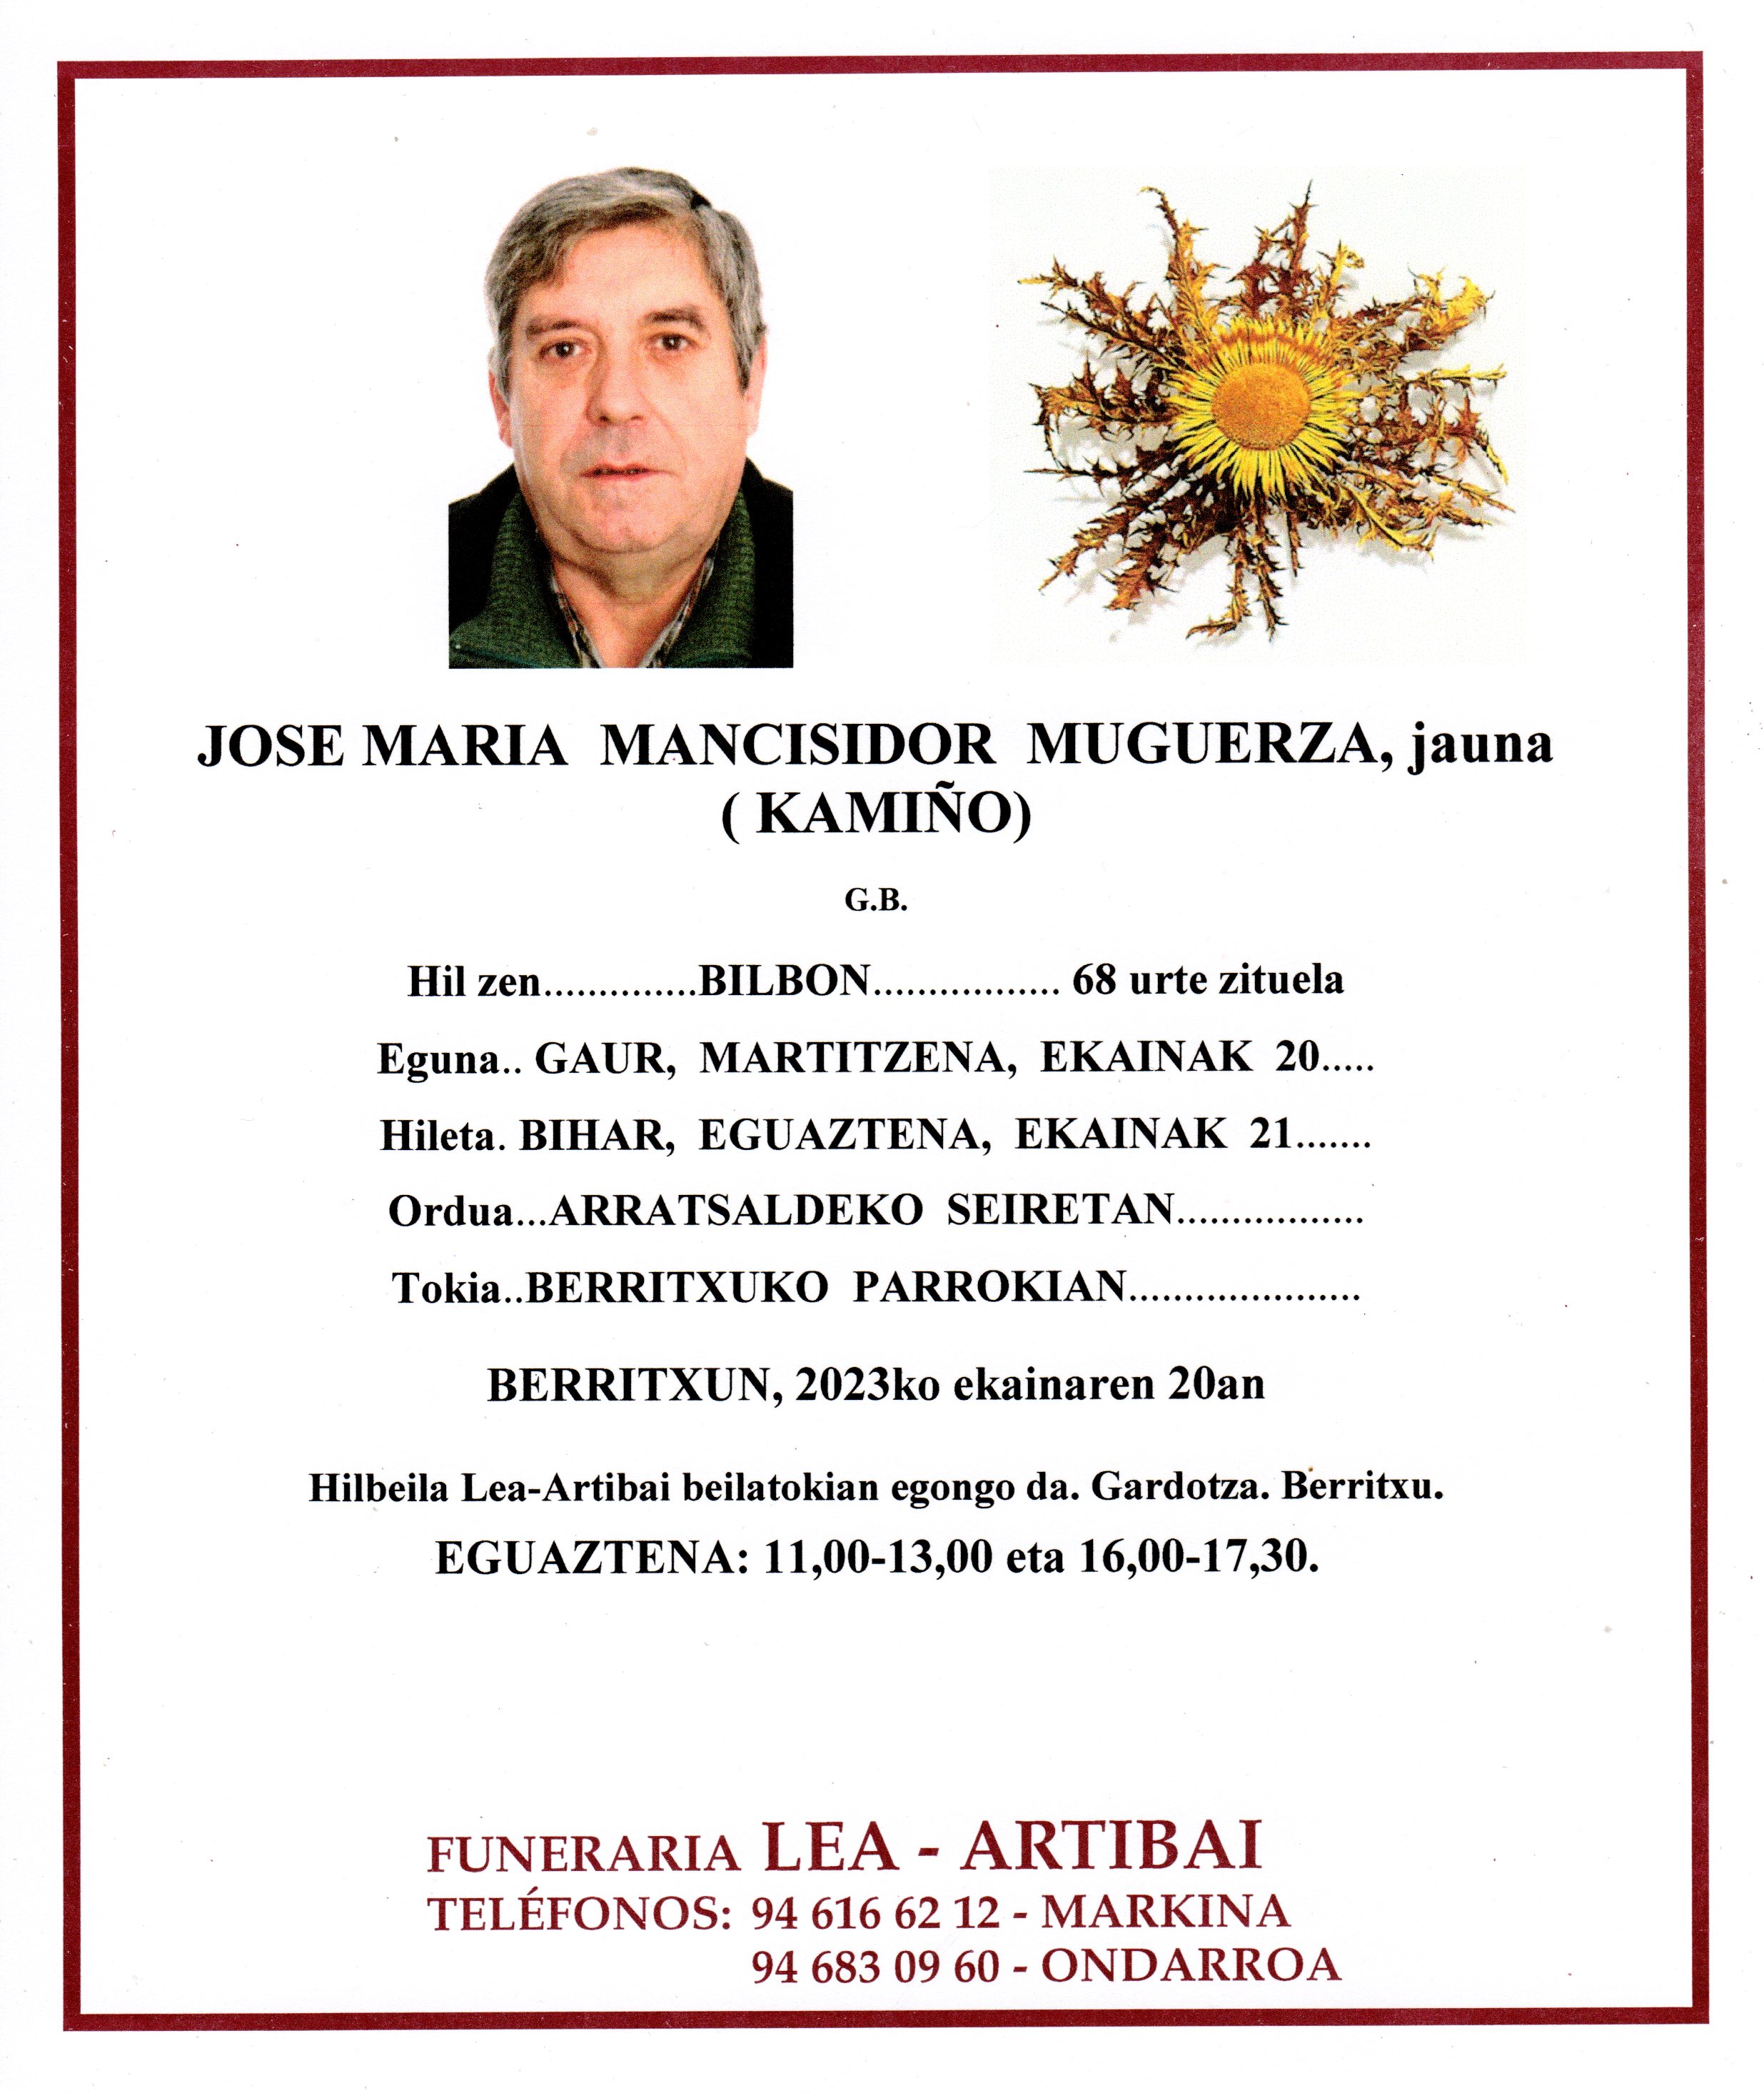 Jose Maria Mancisidor Muguerza